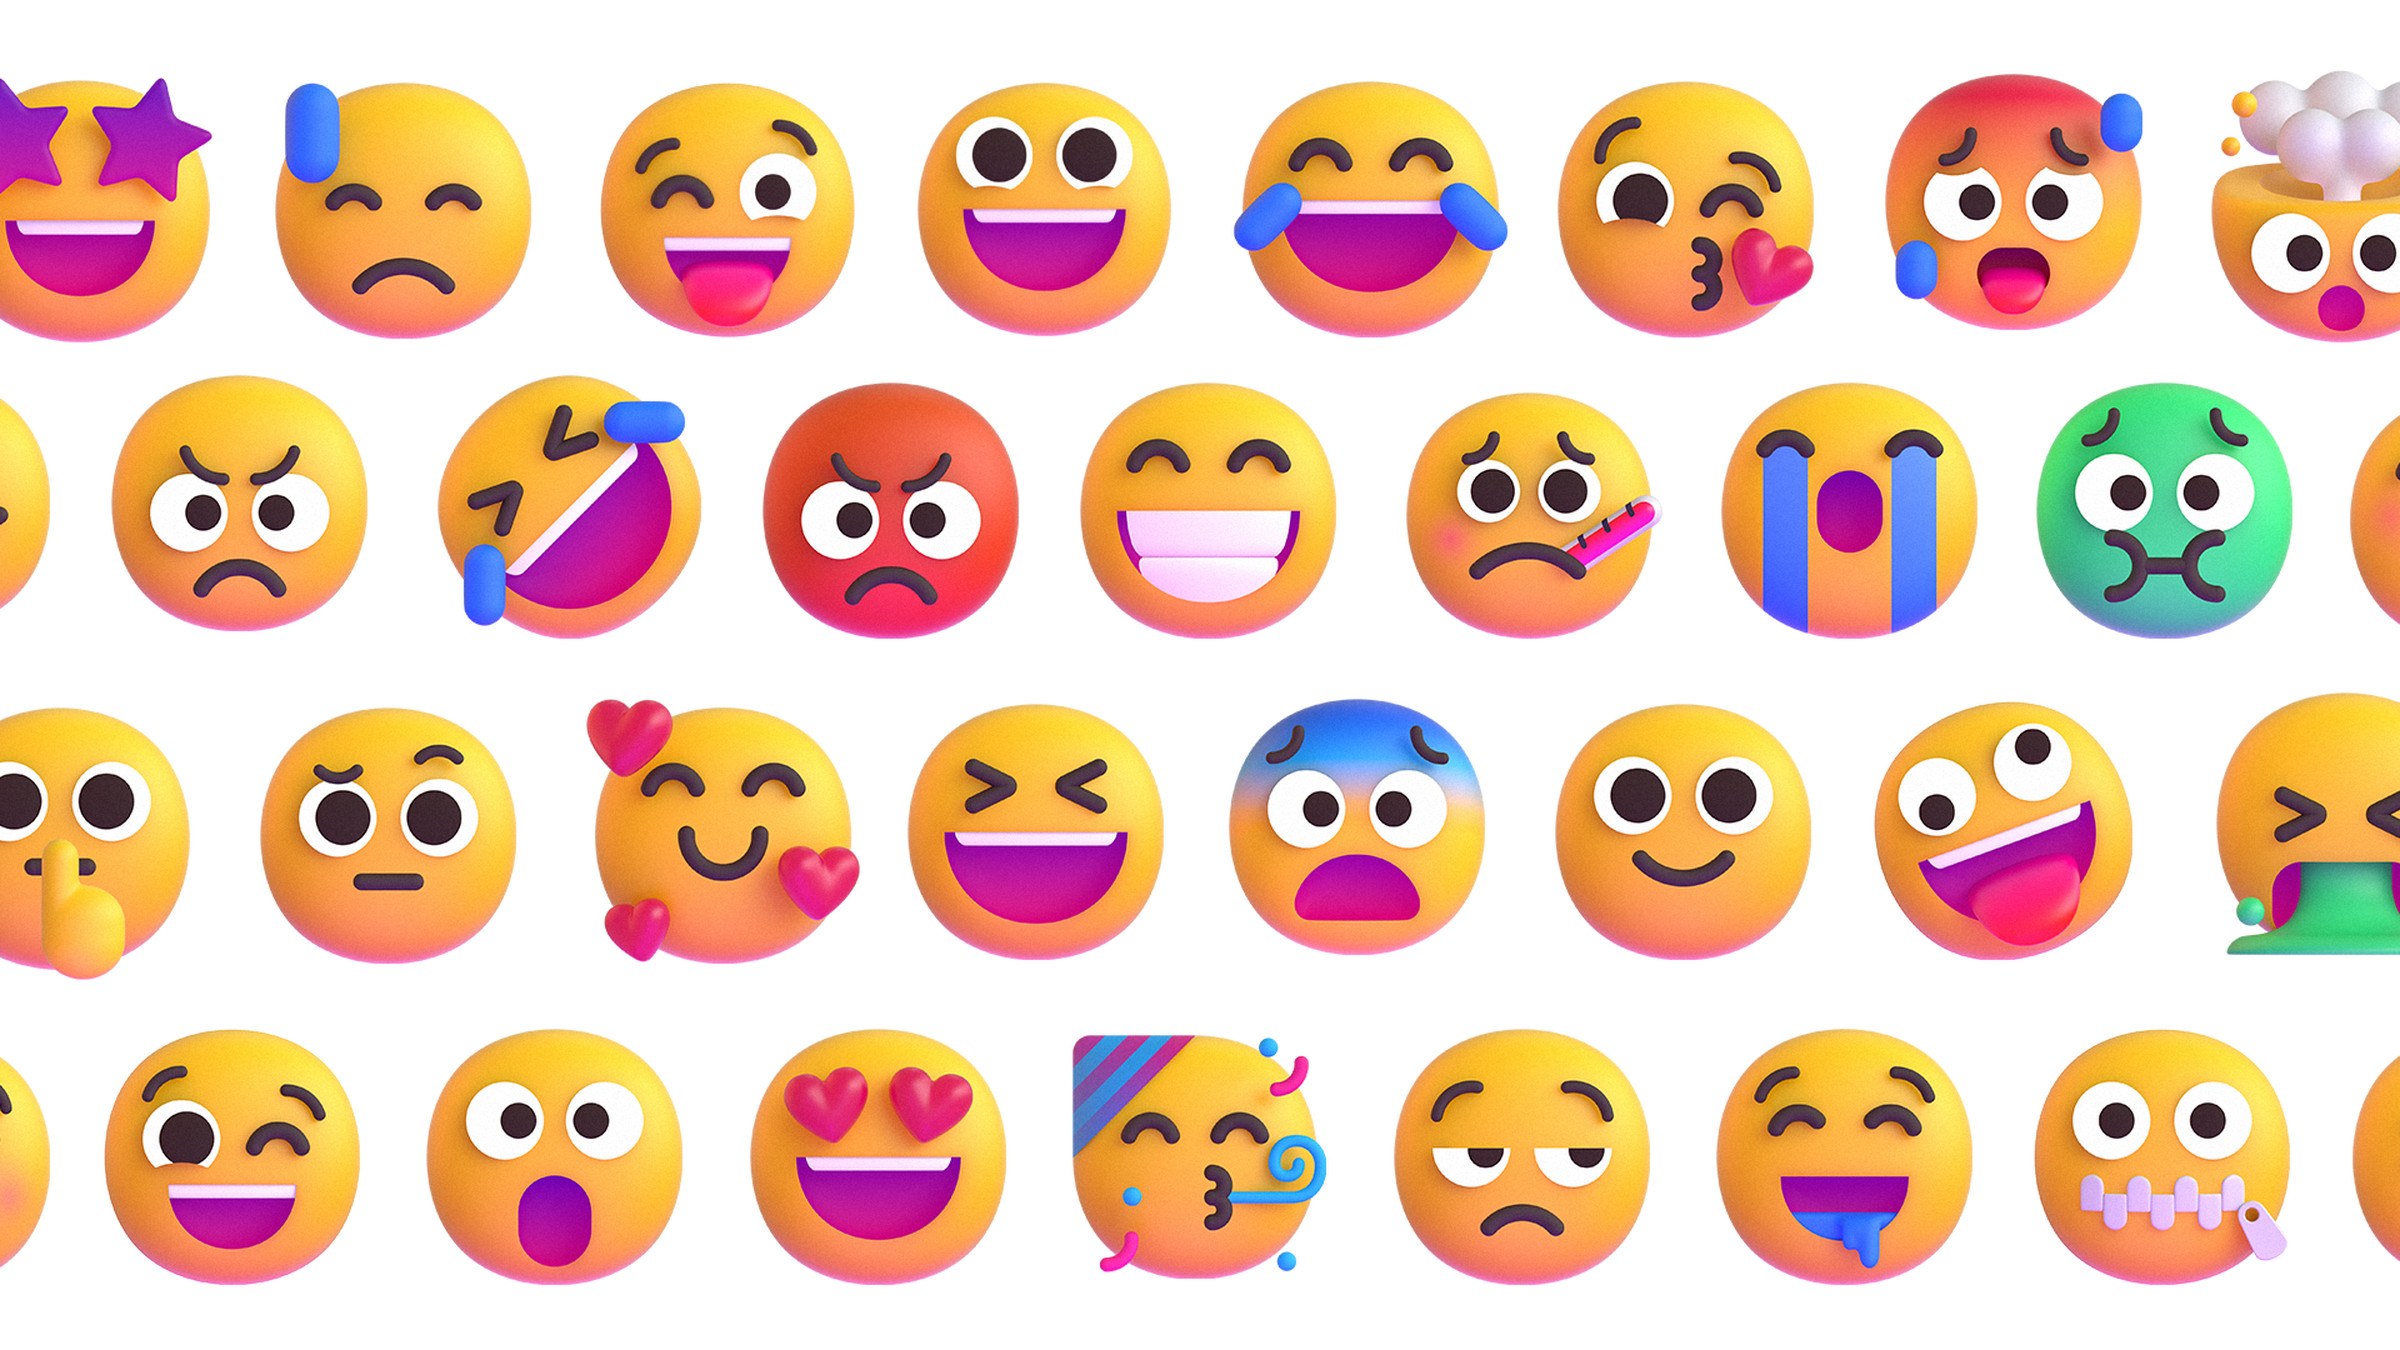 Microsoft’s new smiley emoji.